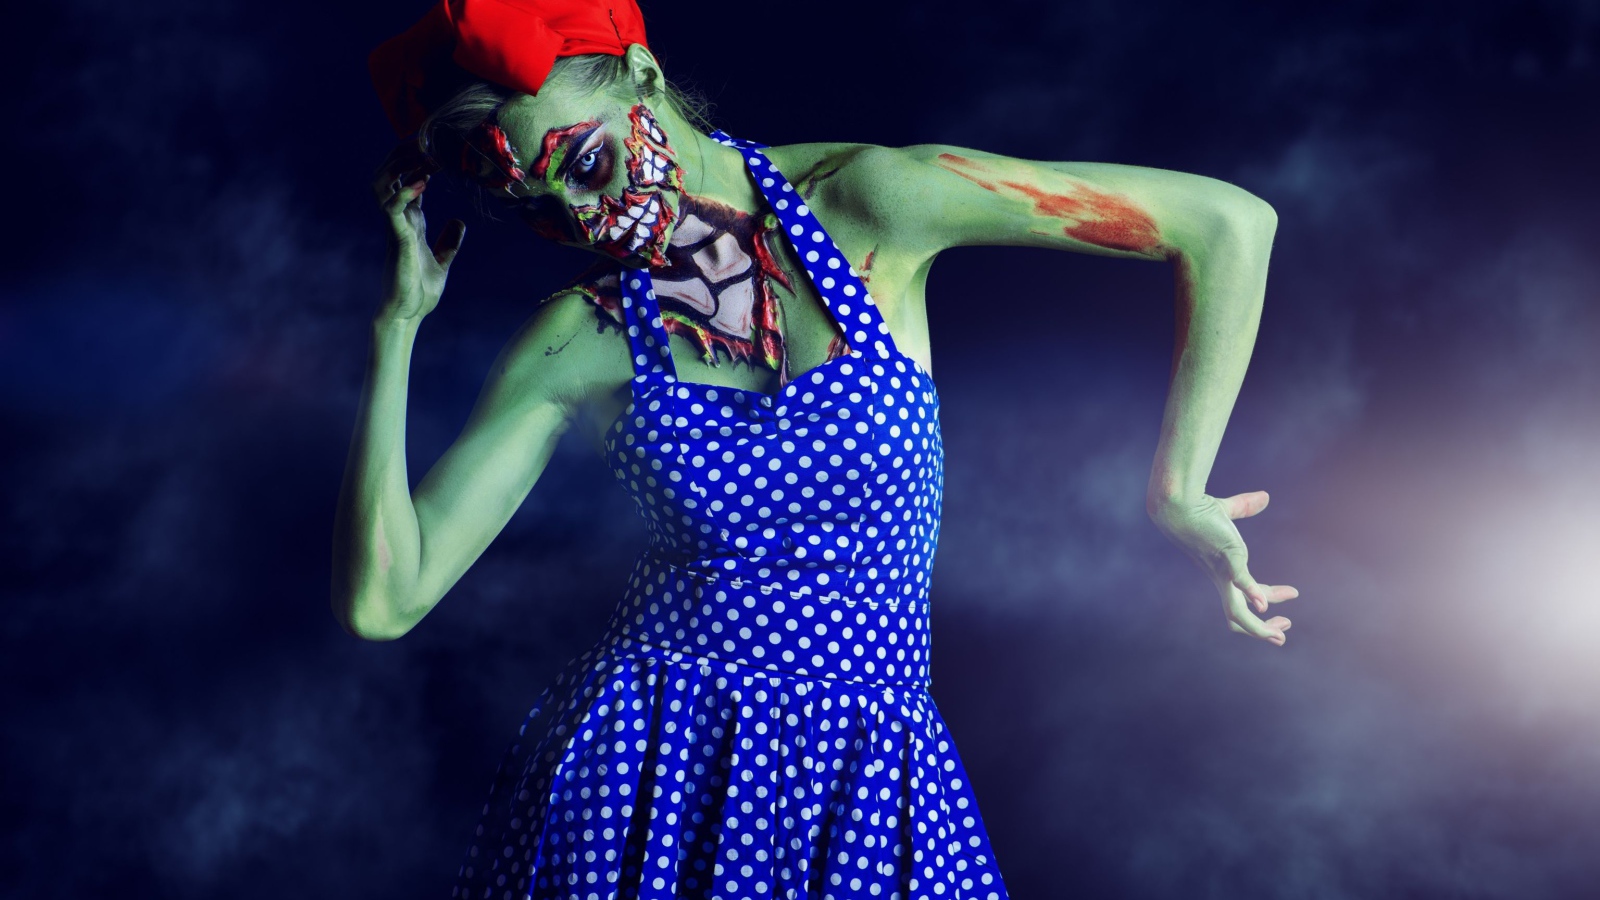 Девушка с гримом зомби на праздник Хэллоуин